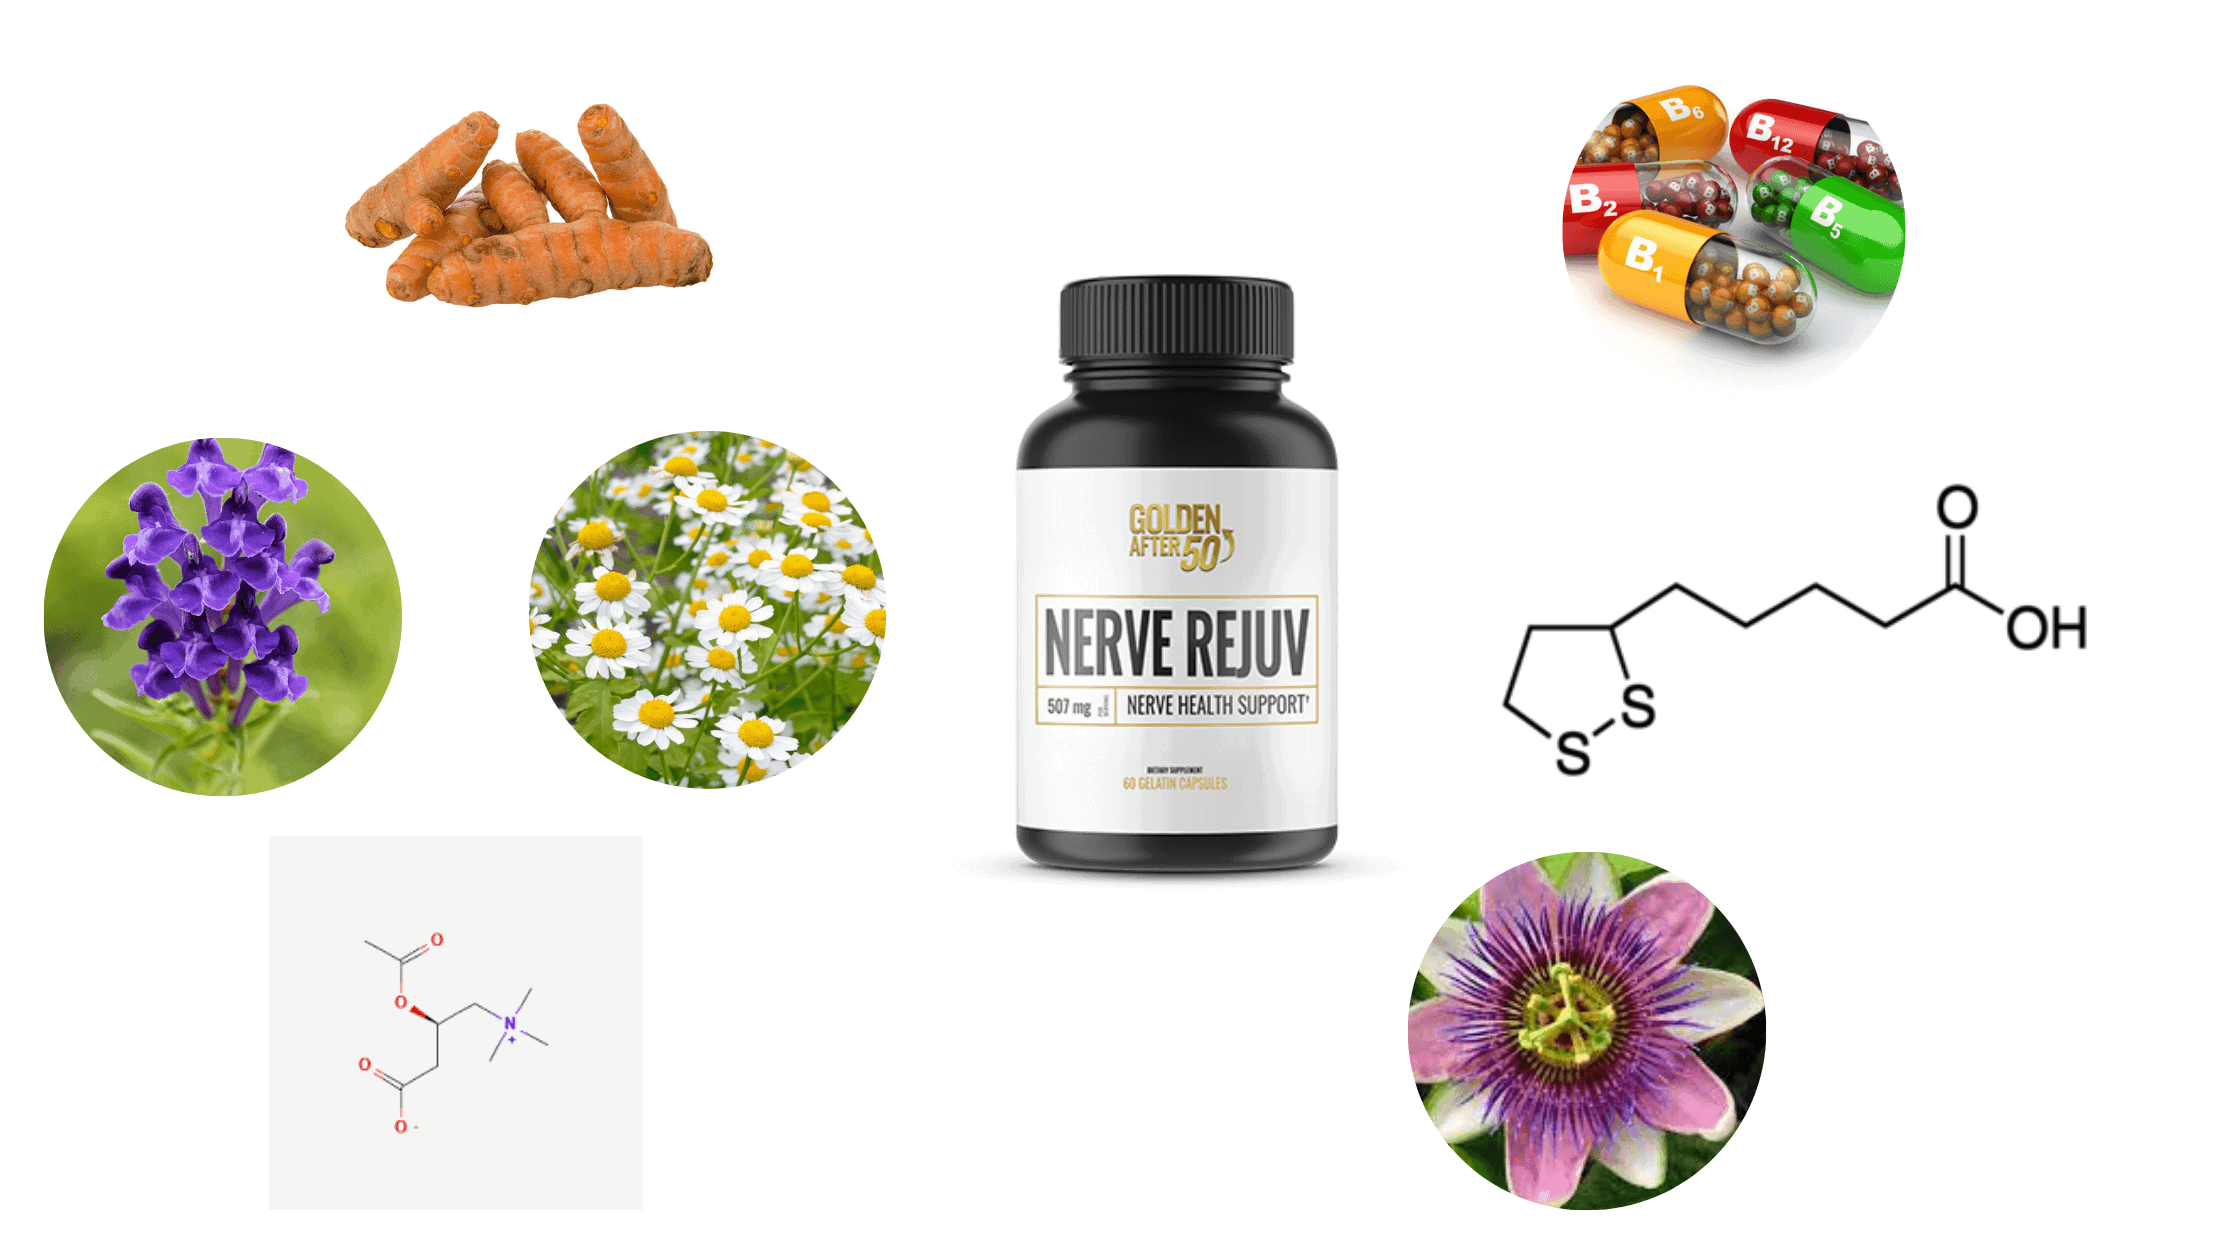  Nerve Rejuv Ingredients